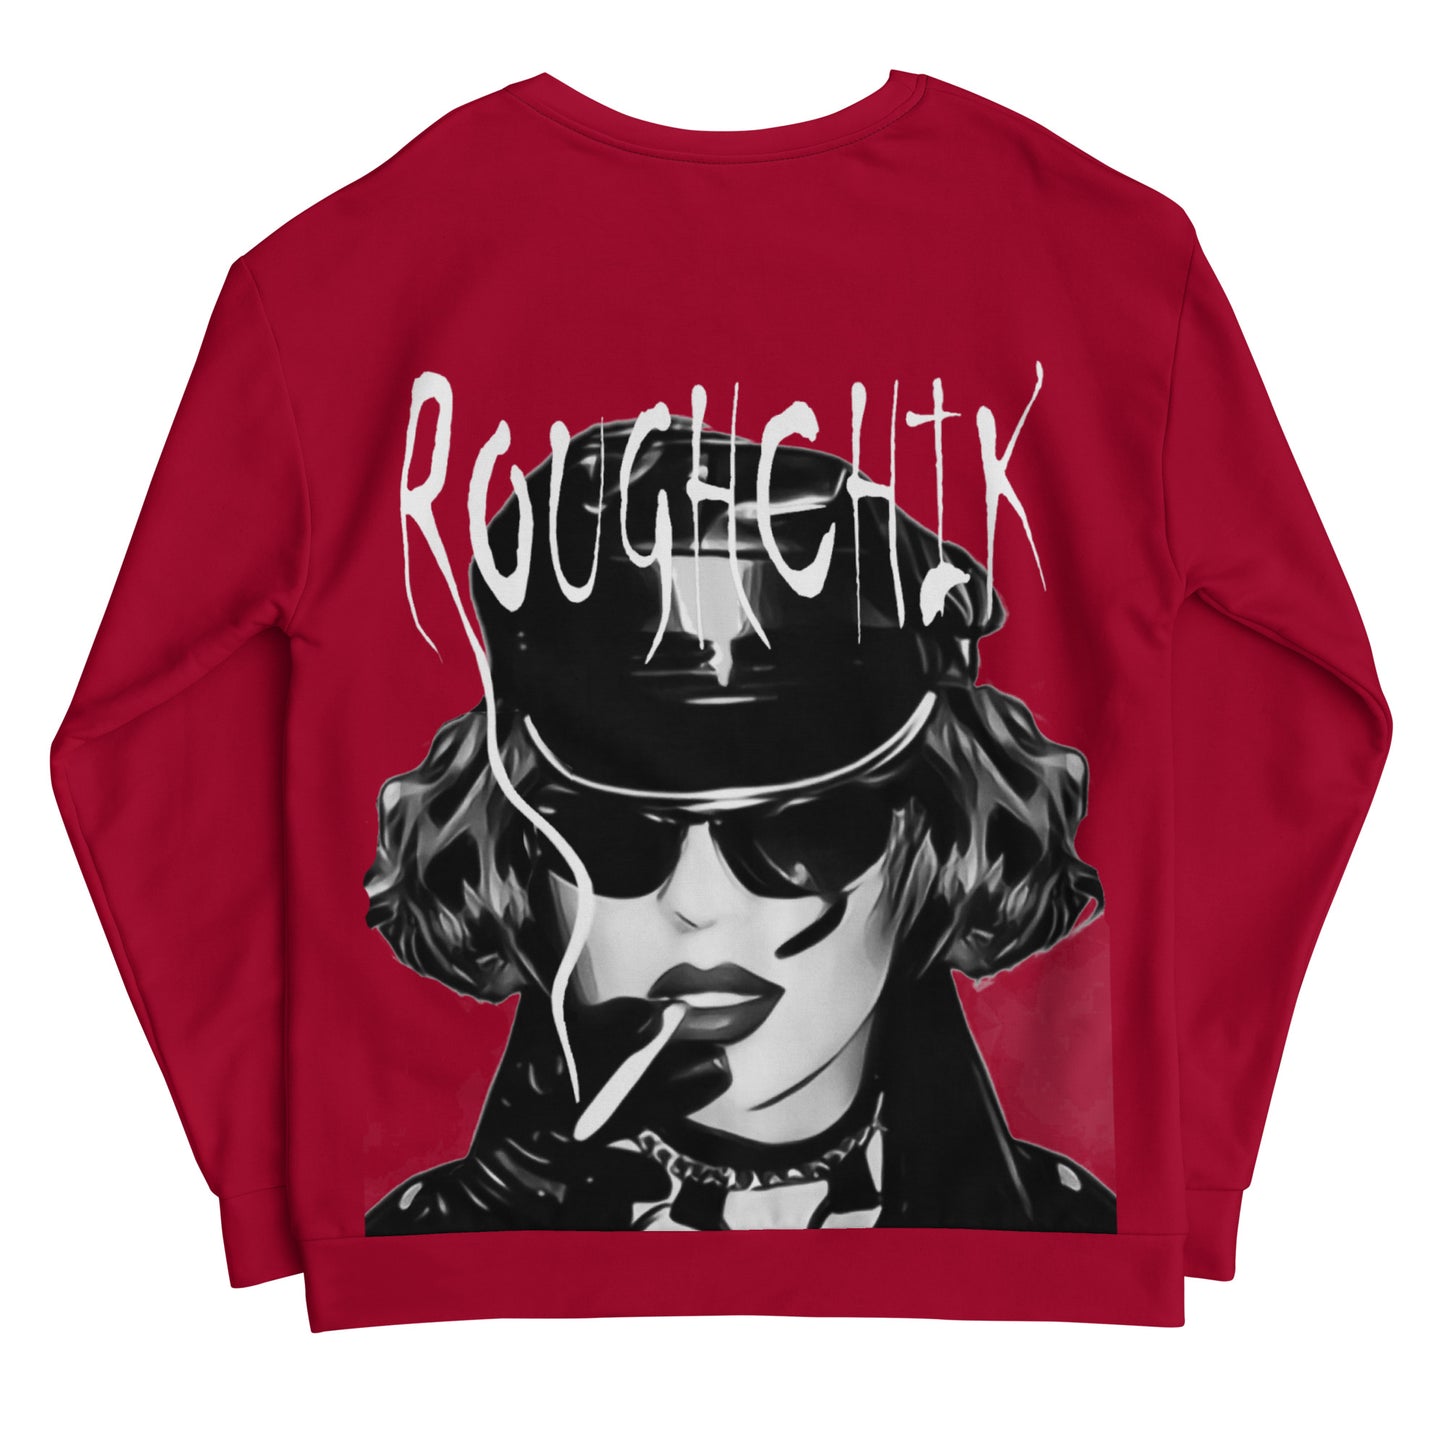 ROUGHCHIK LOGO Sweatshirt - RED